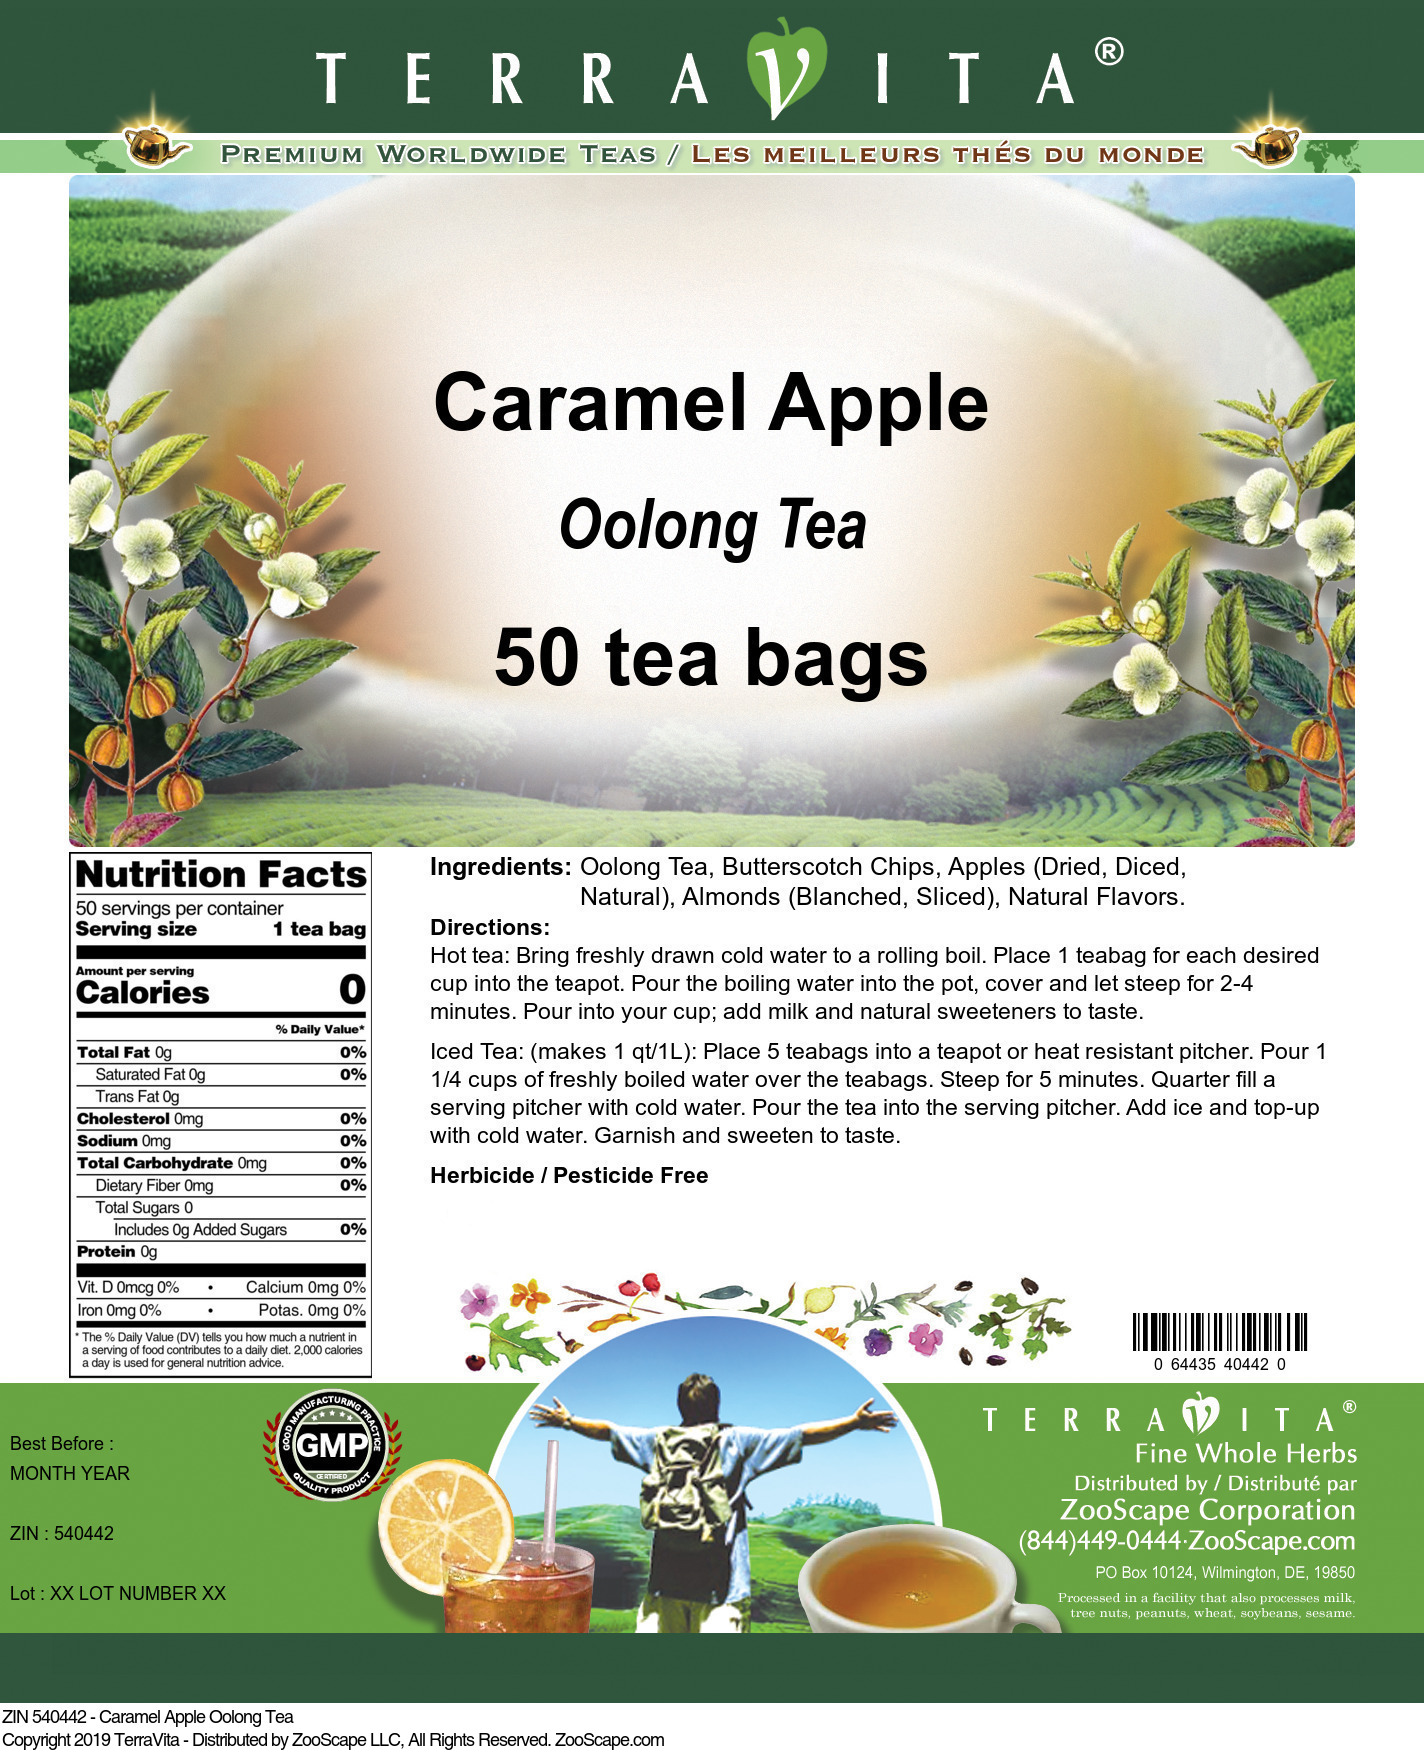 Caramel Apple Oolong Tea - Label